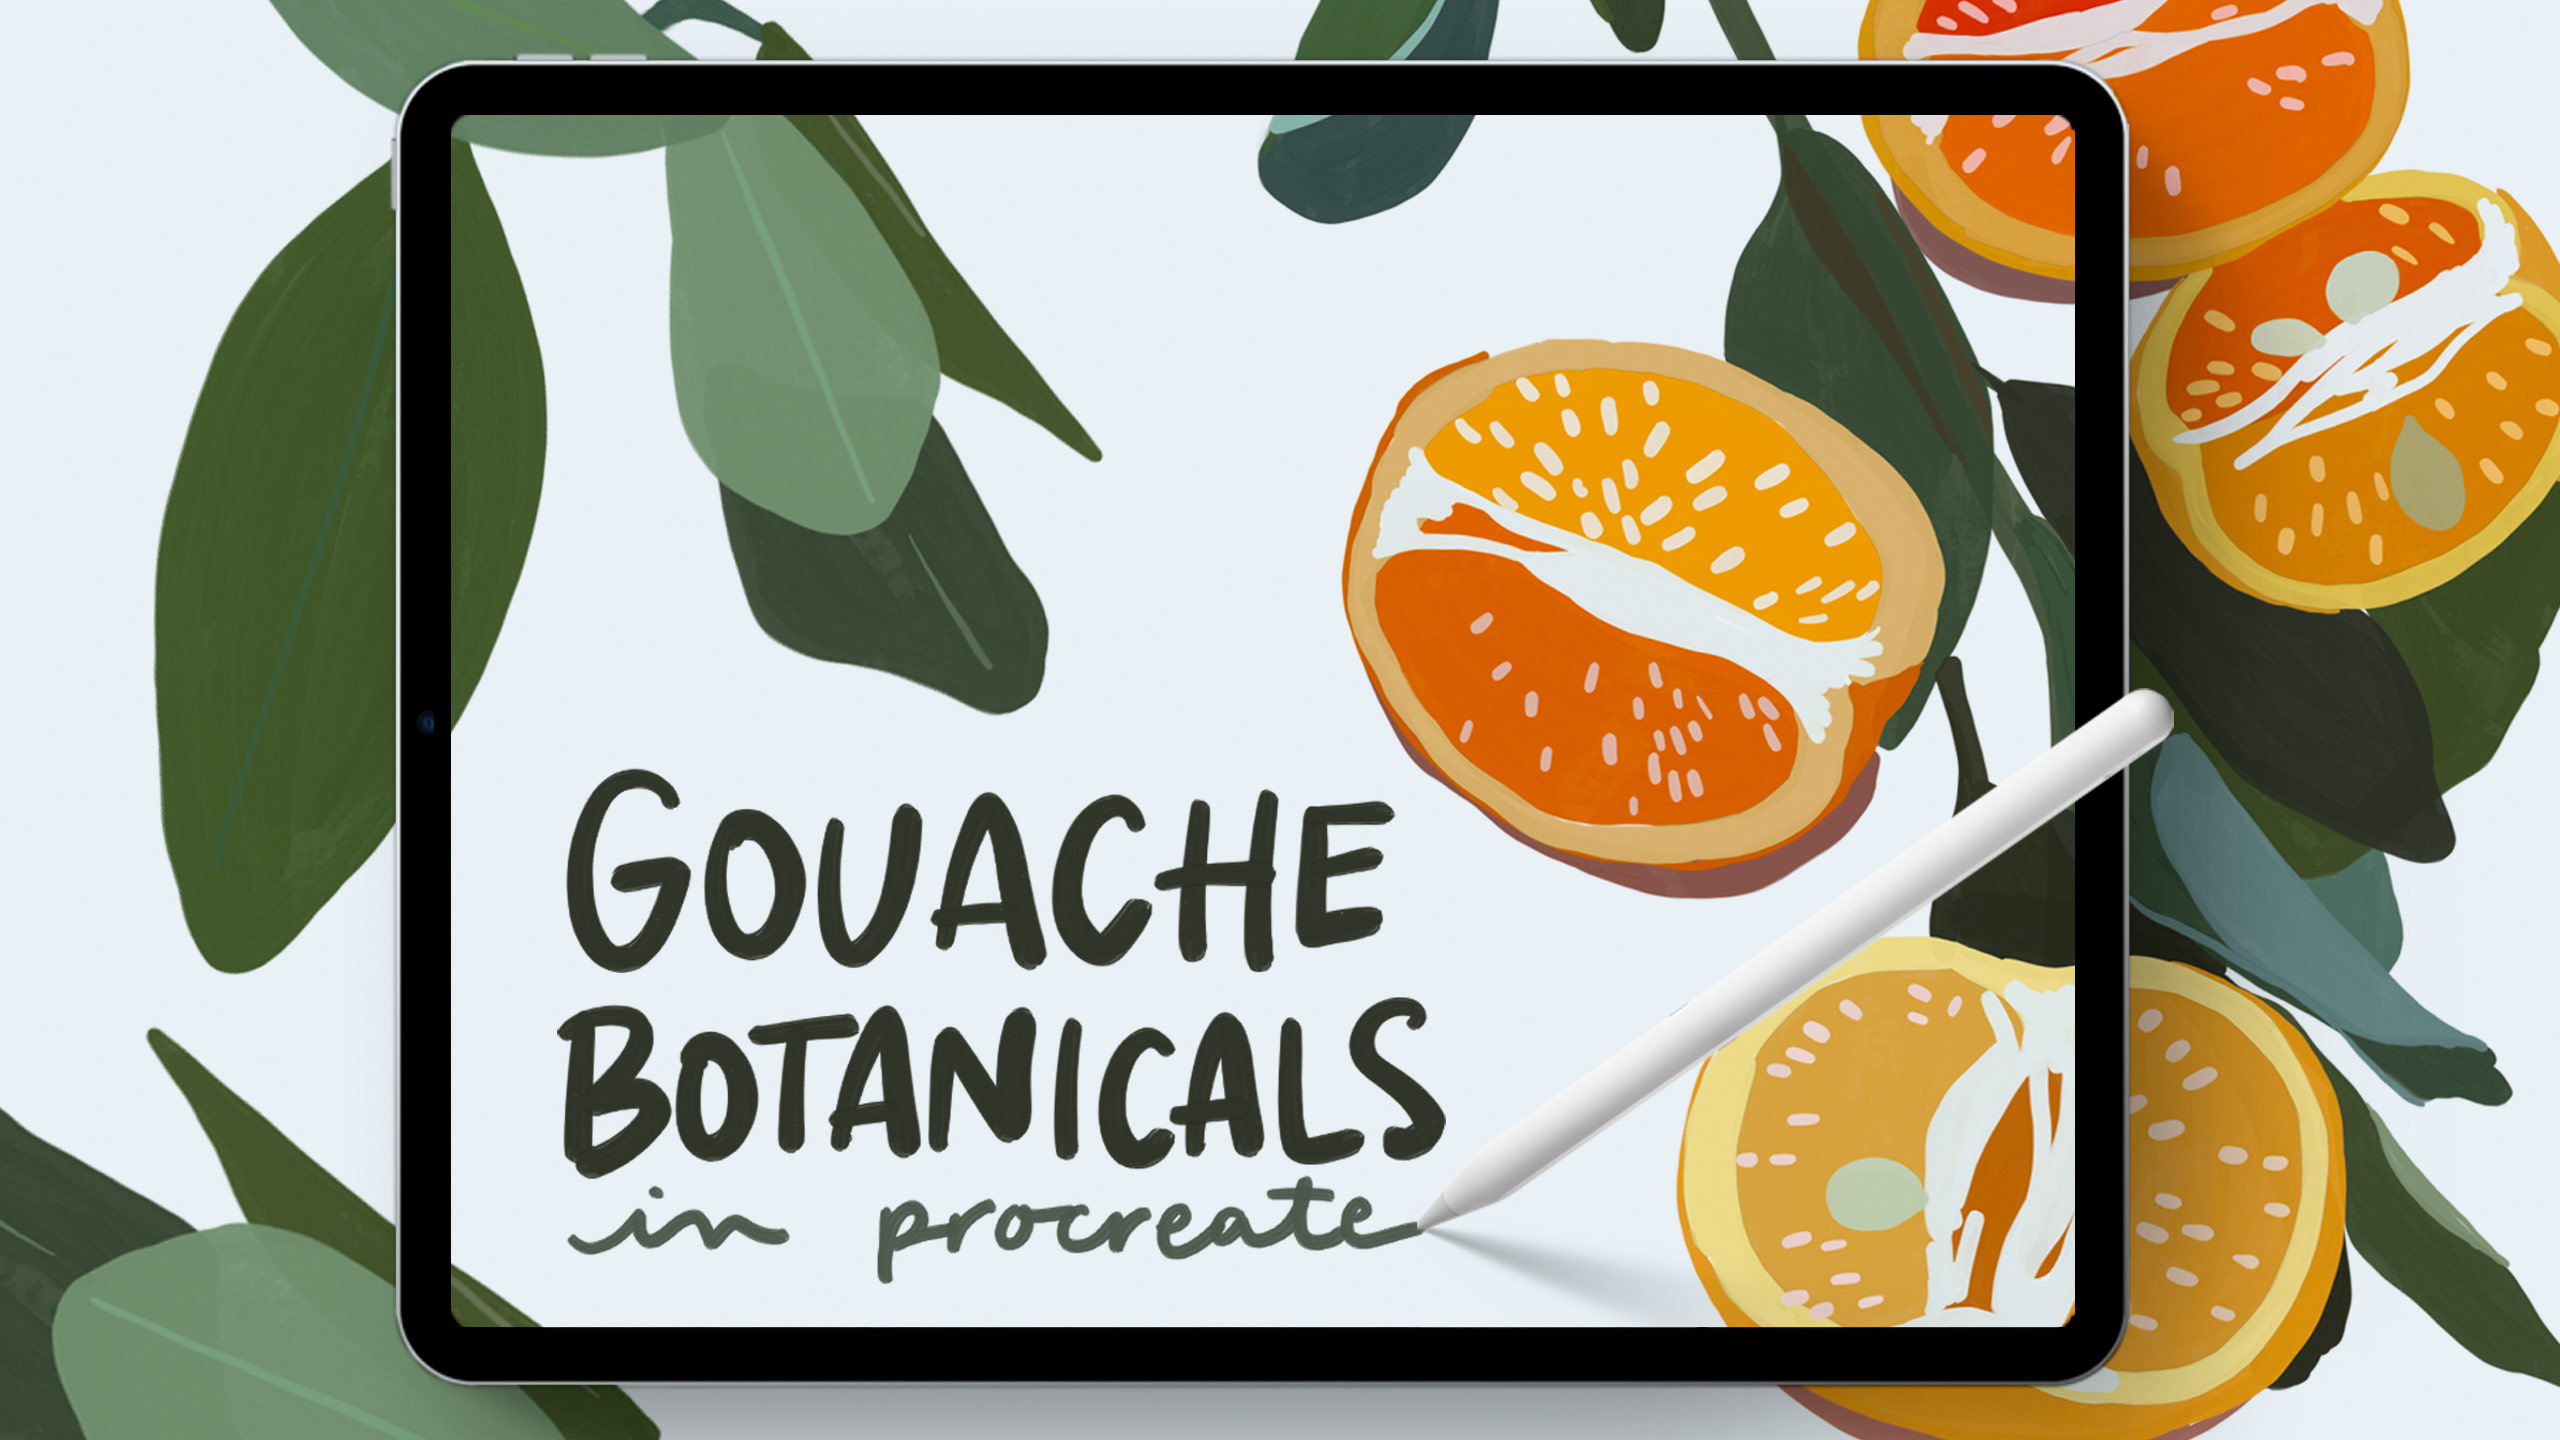 Gouache botanicals in procreate course image